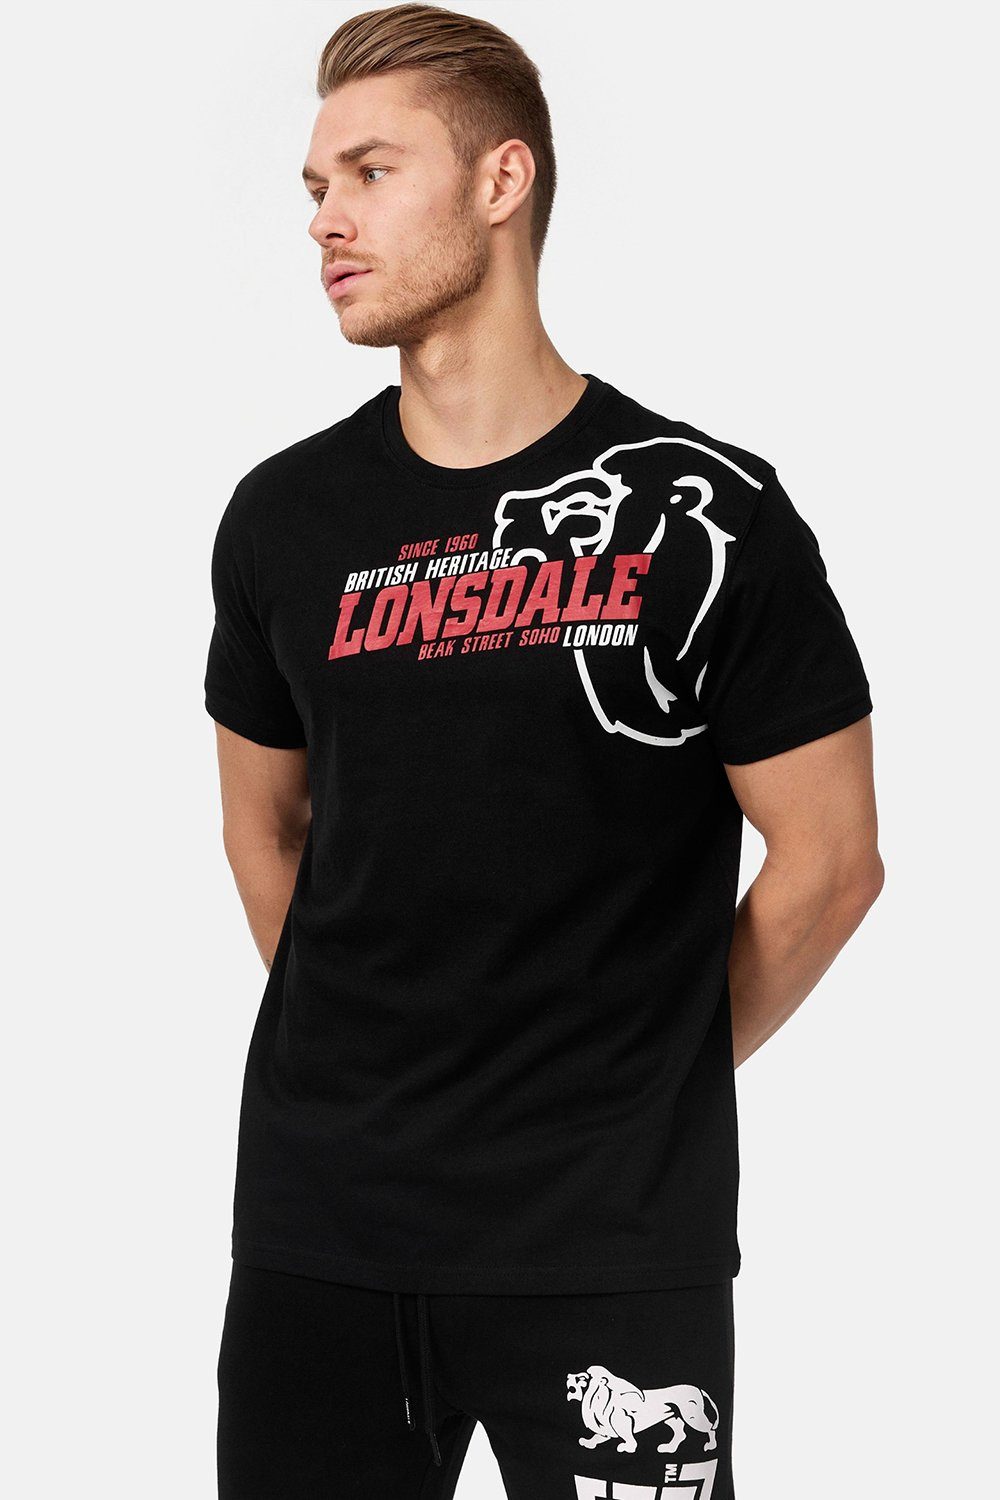 WALKLEY Black Lonsdale T-Shirt